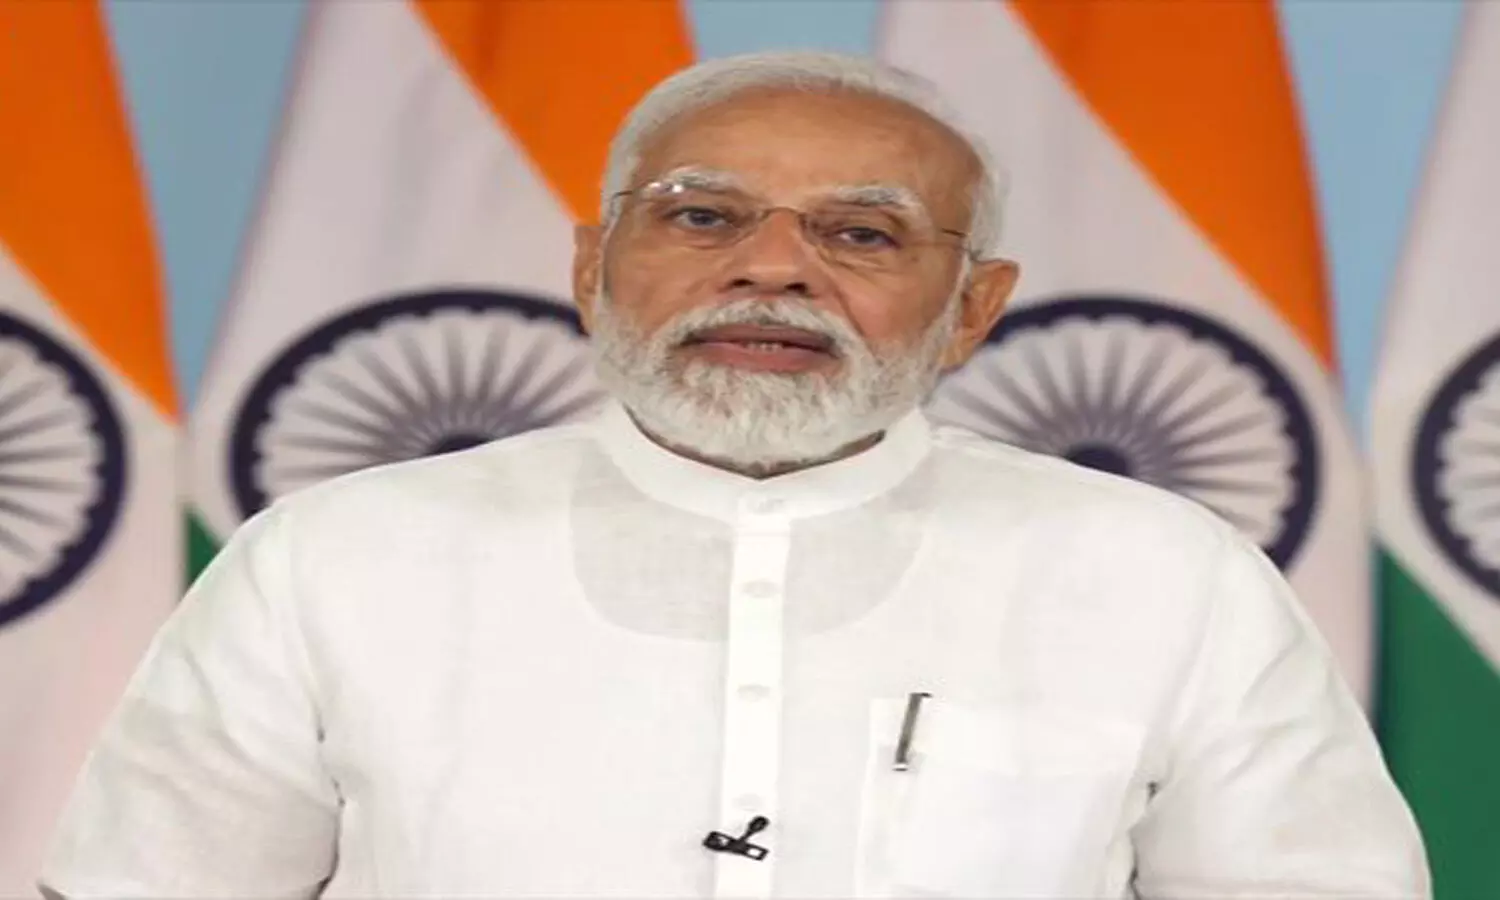 PM Narendra Modi delighted about Indias participation at Cannes Film Festival 2022; Calls it a milestone